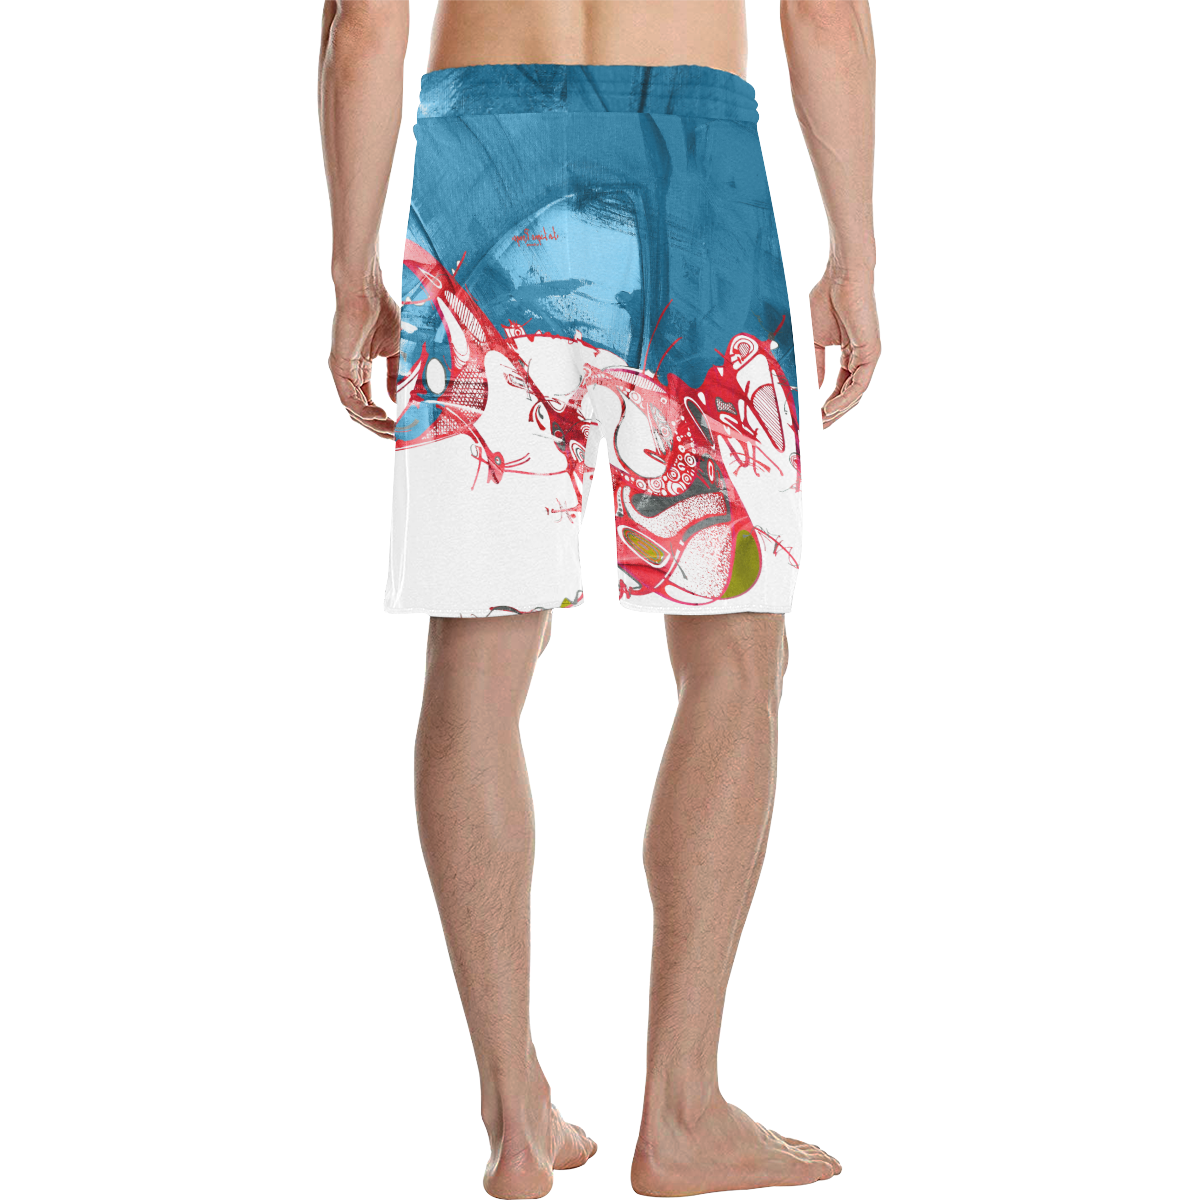 "Sursoi" swim shorts